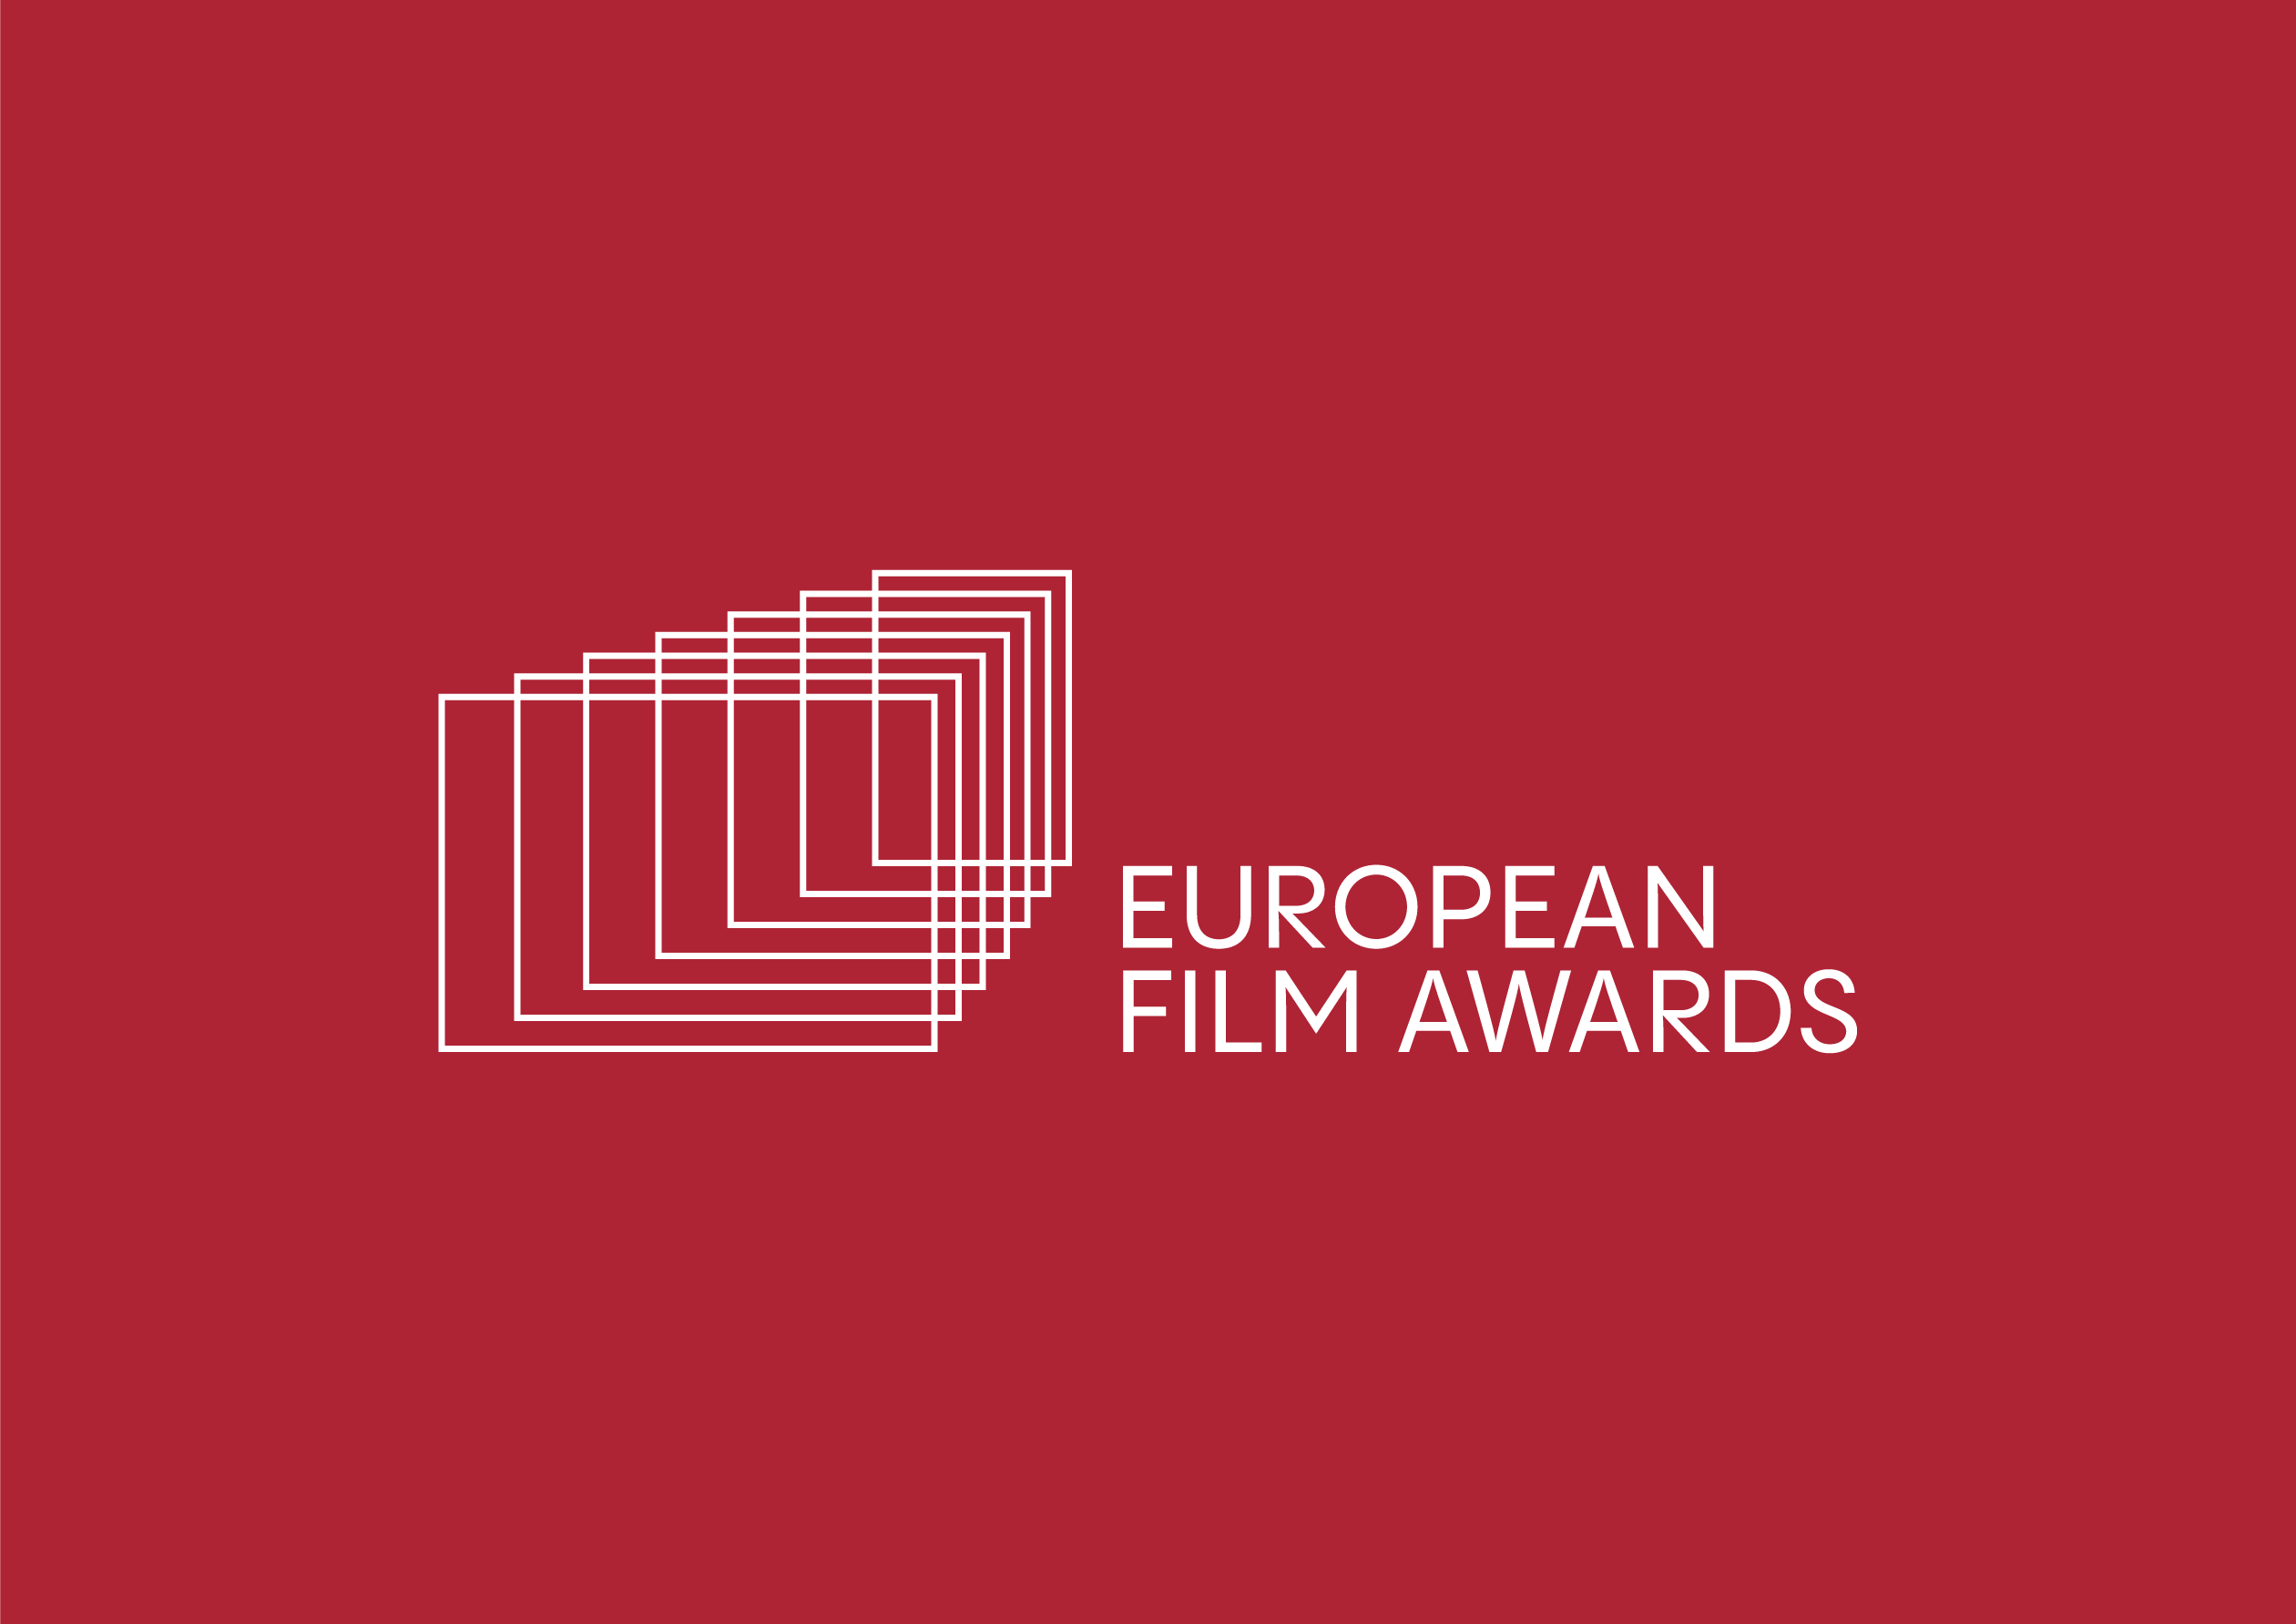 European Film Awards